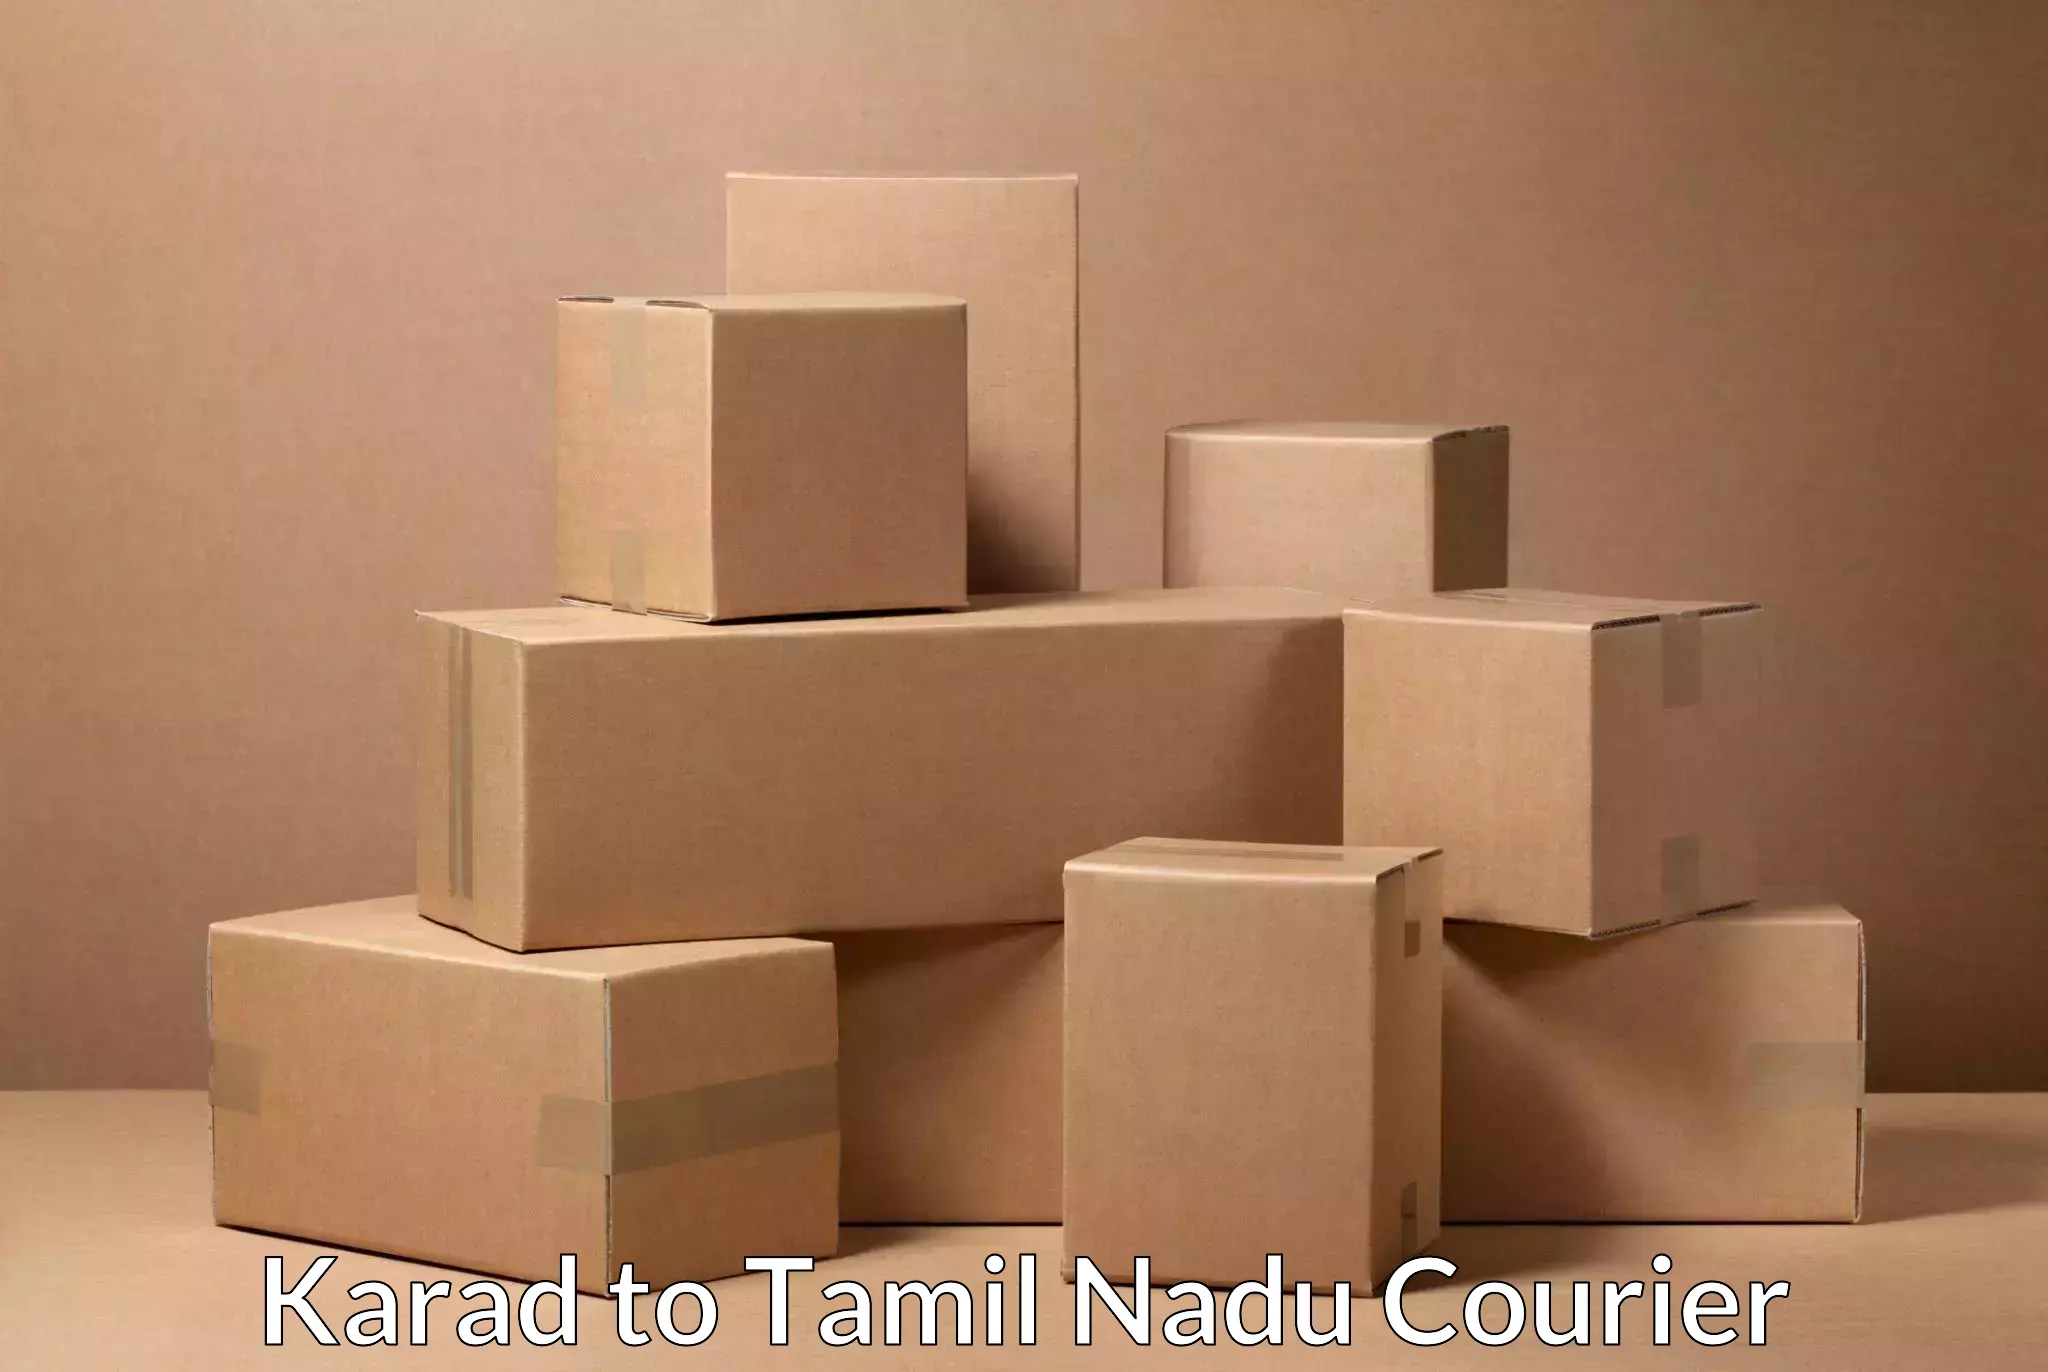 User-friendly delivery service Karad to Tamil Nadu